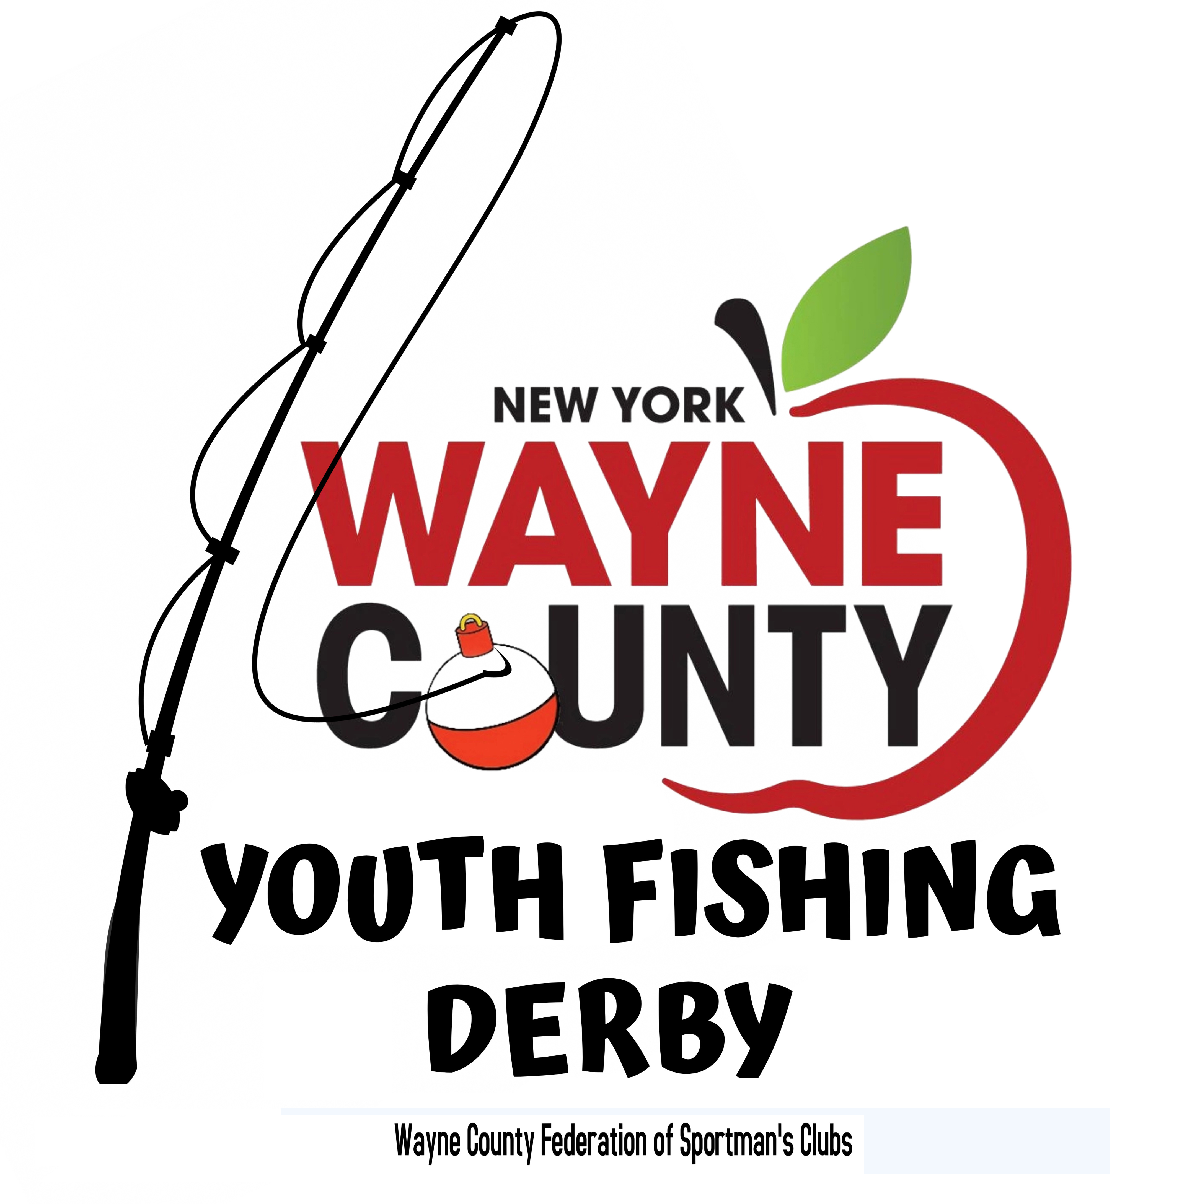 Wayne County Youth Fishing Derby